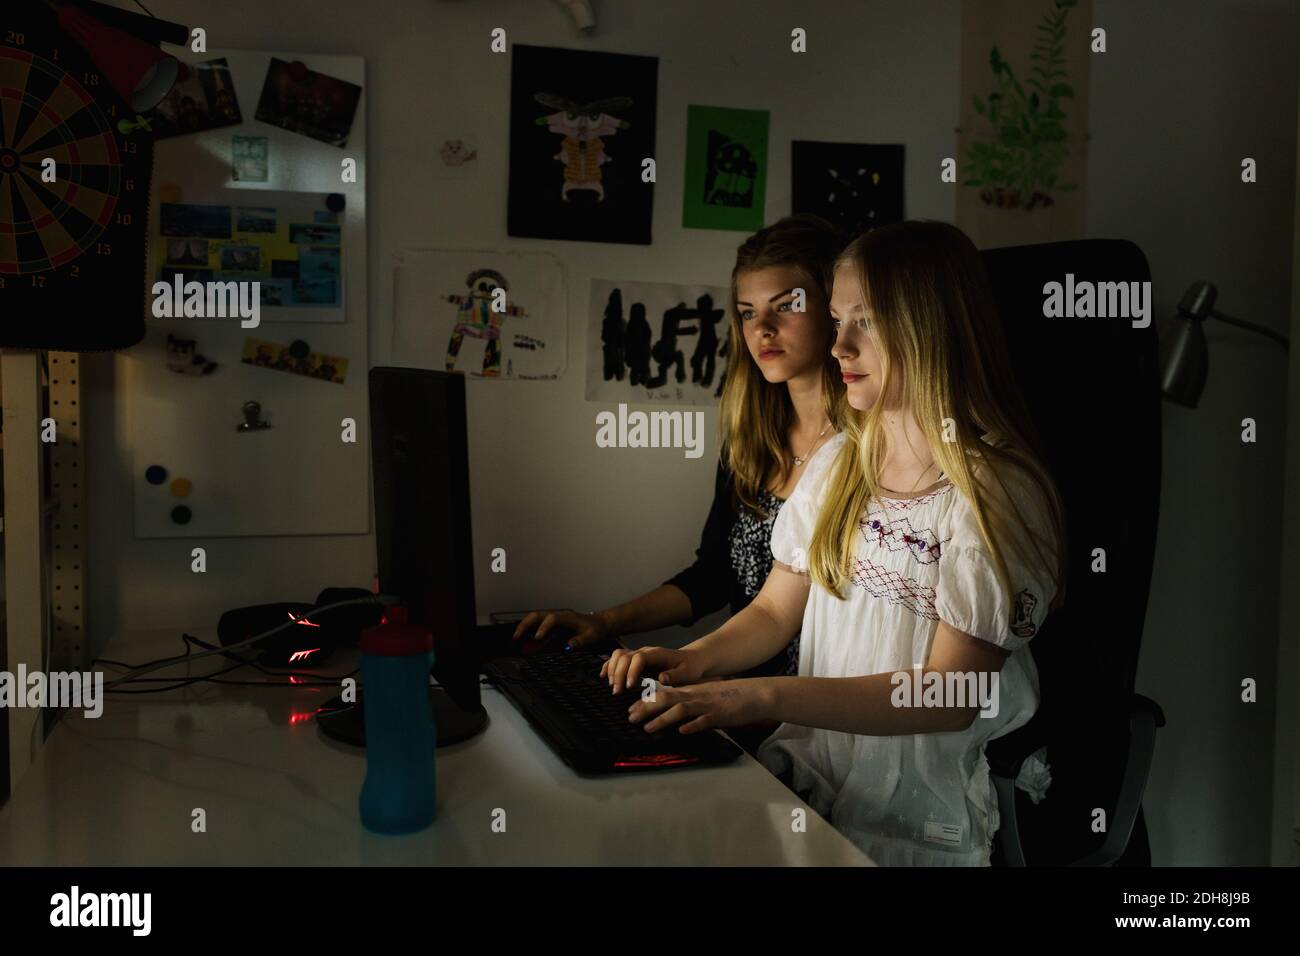 Teenage girls using computer in darkroom at home Stock Photo